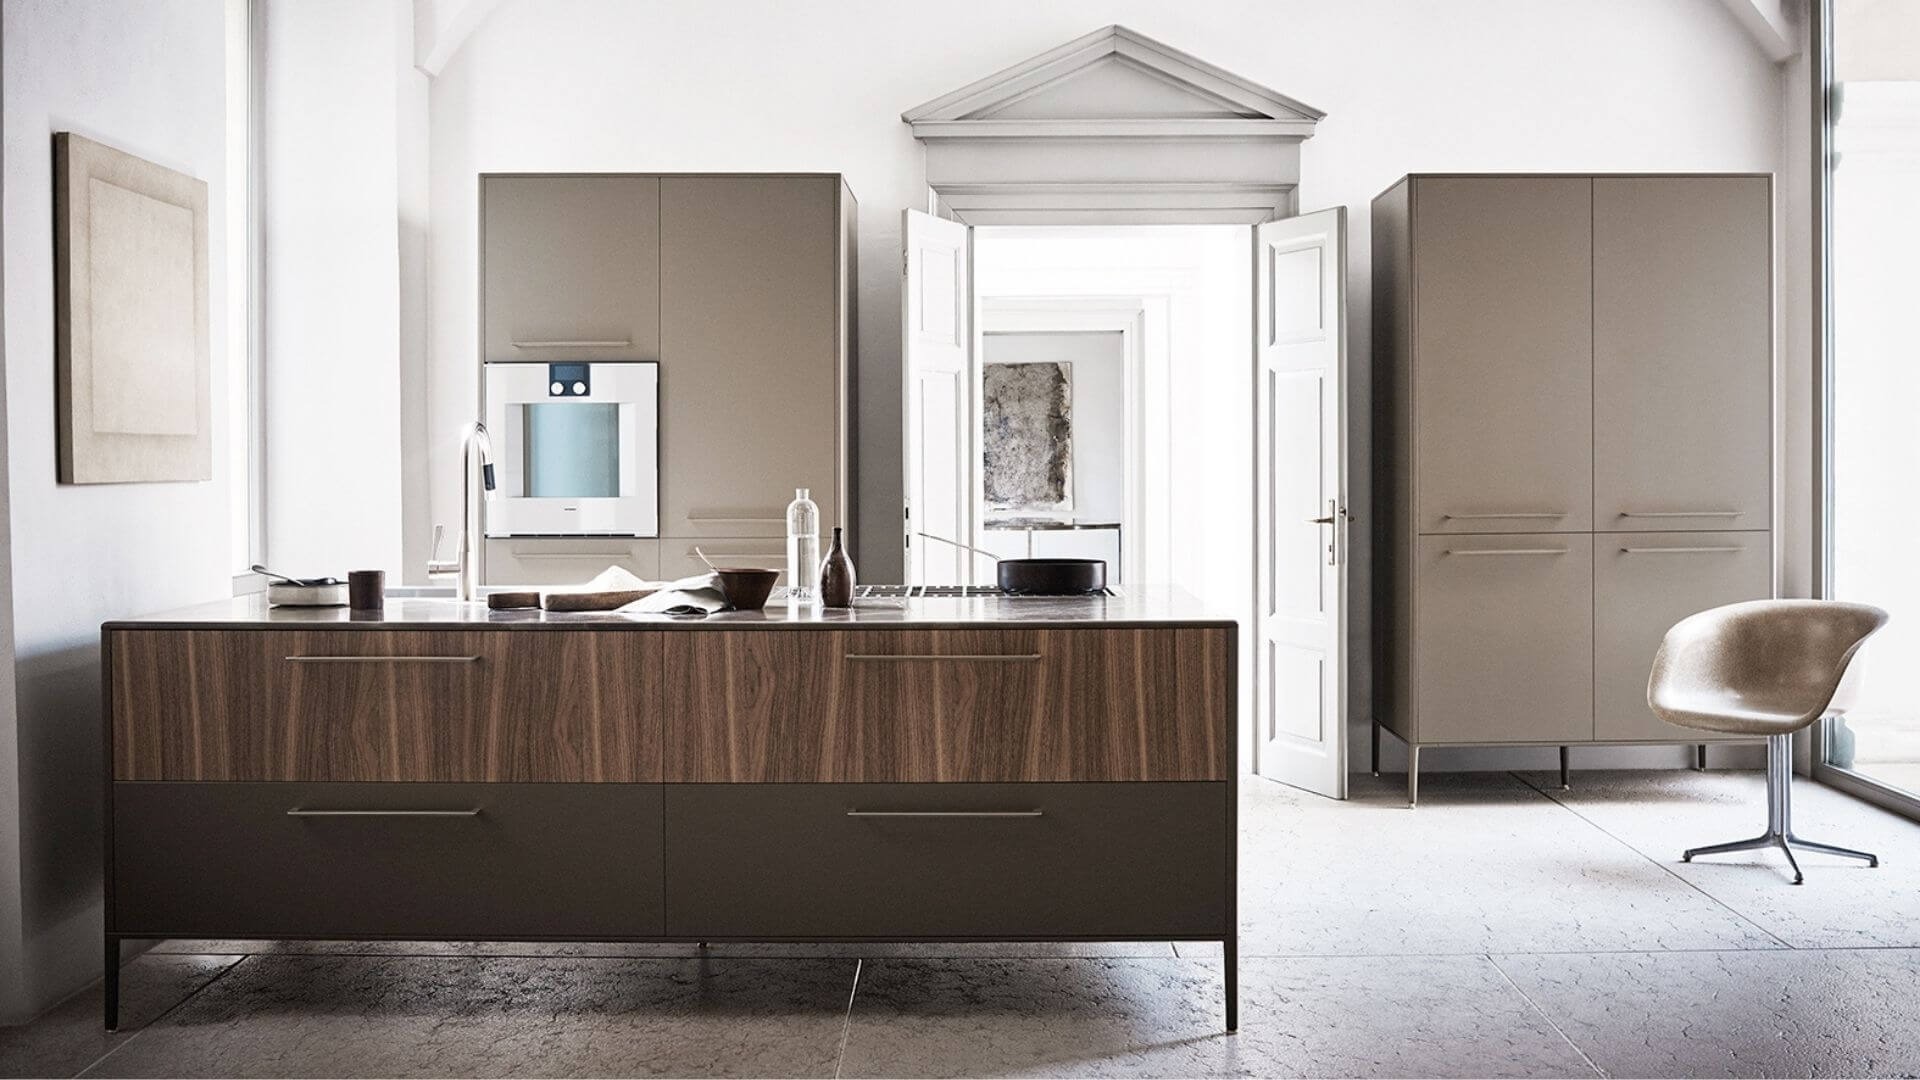 How_to_furnish_a_modern_and_design_kitchen_IDW_Italia_Prague_Biella